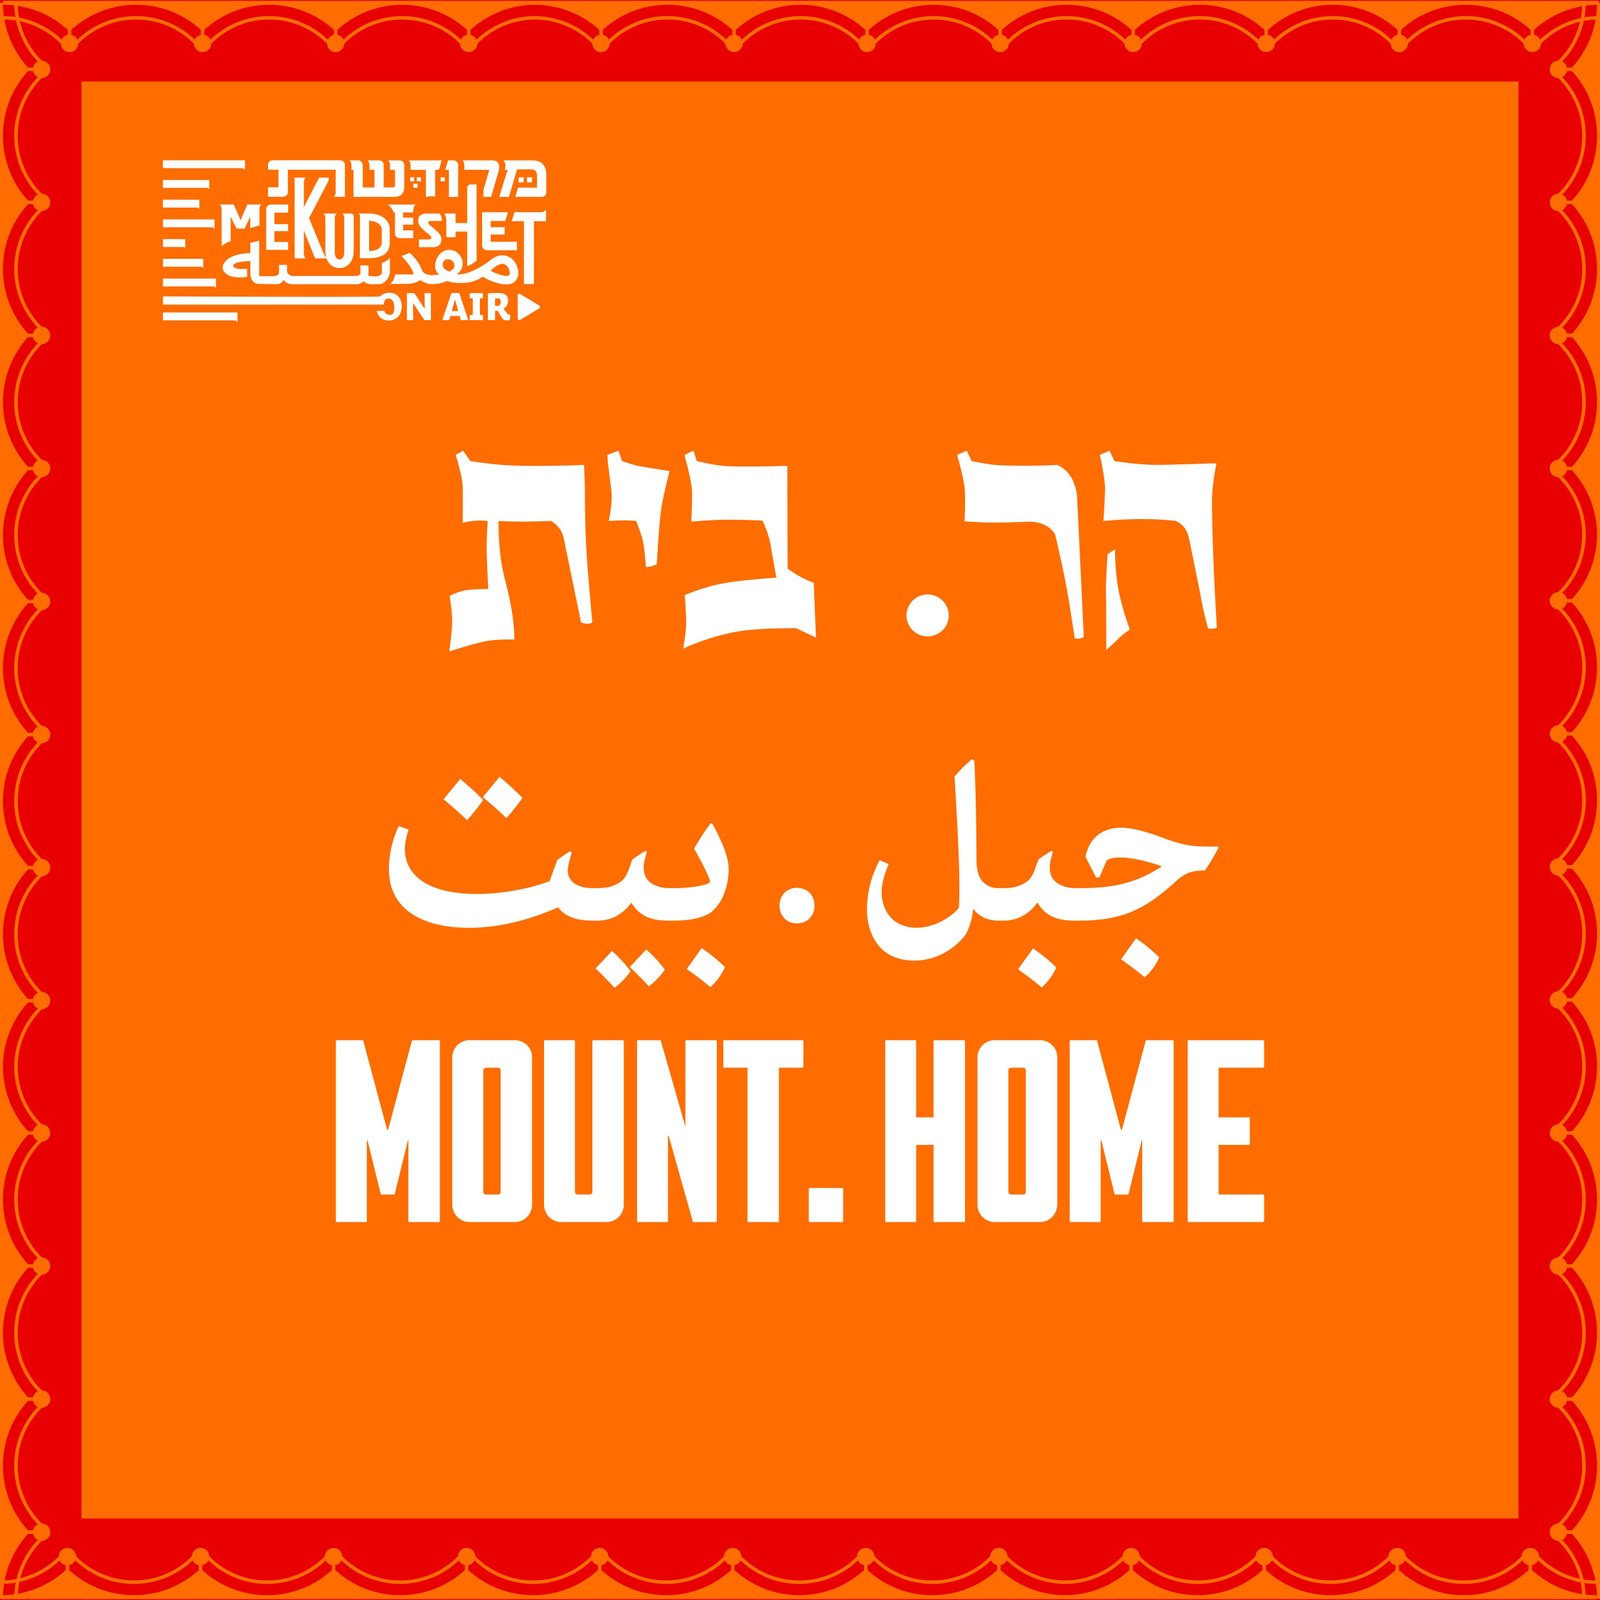 Mount. Home - Listen to Mahmoud Muna